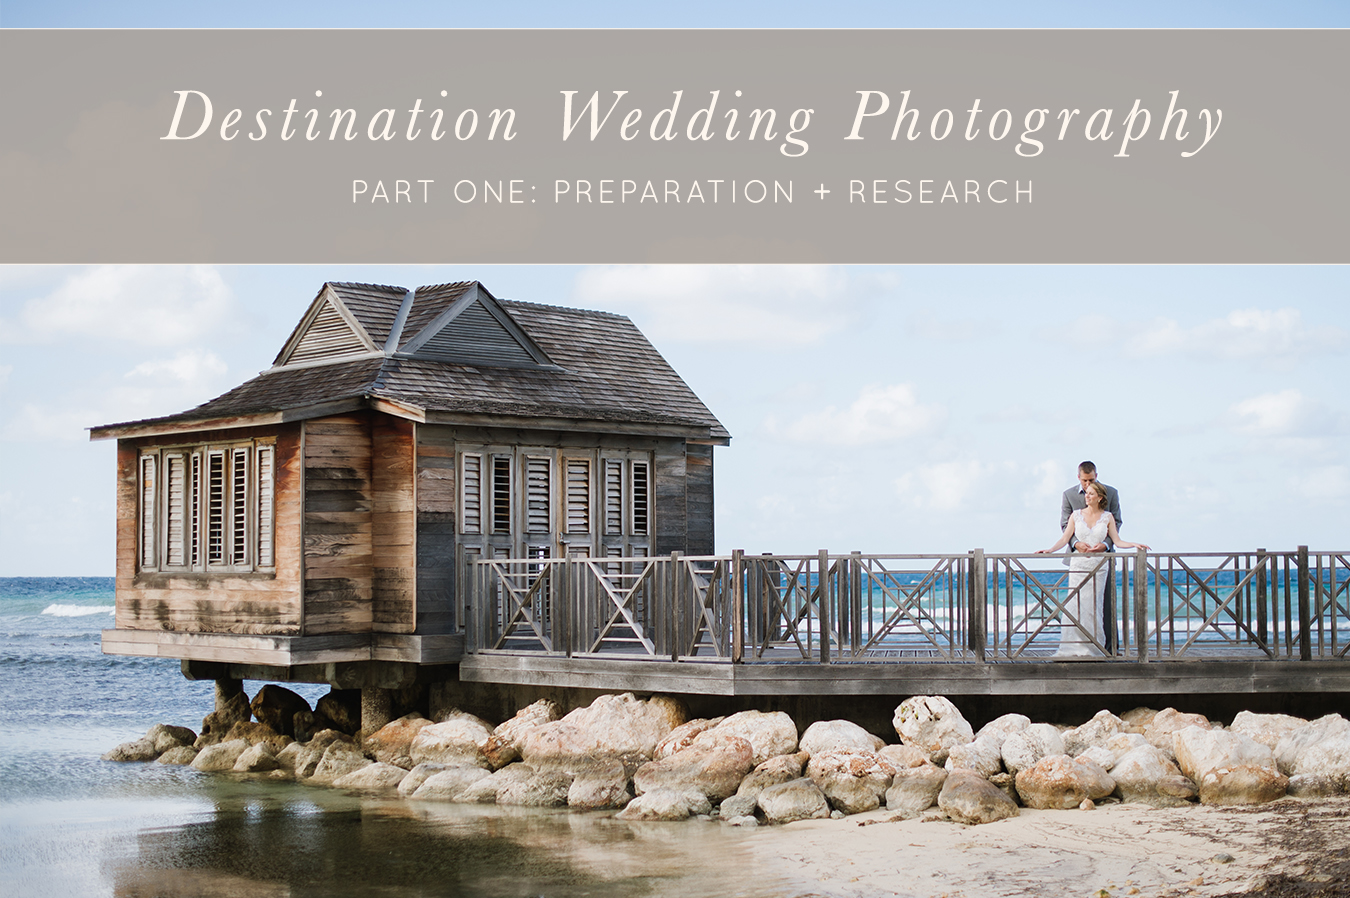 Destination Wedding Photography Travel Tips from International Photographer, Natalie Franke